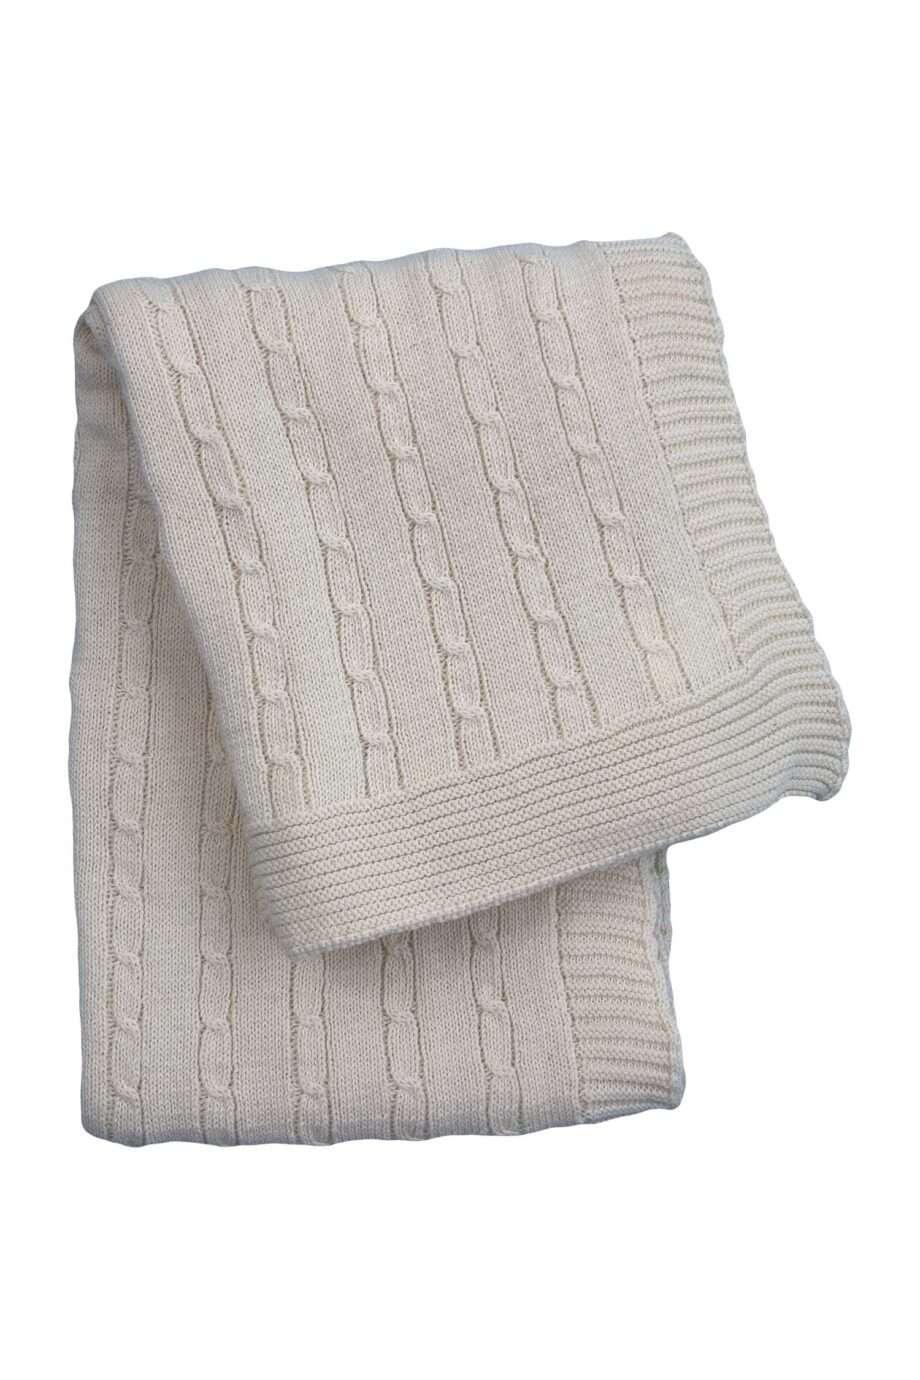 twist small ecru knitted cotton little blanket small